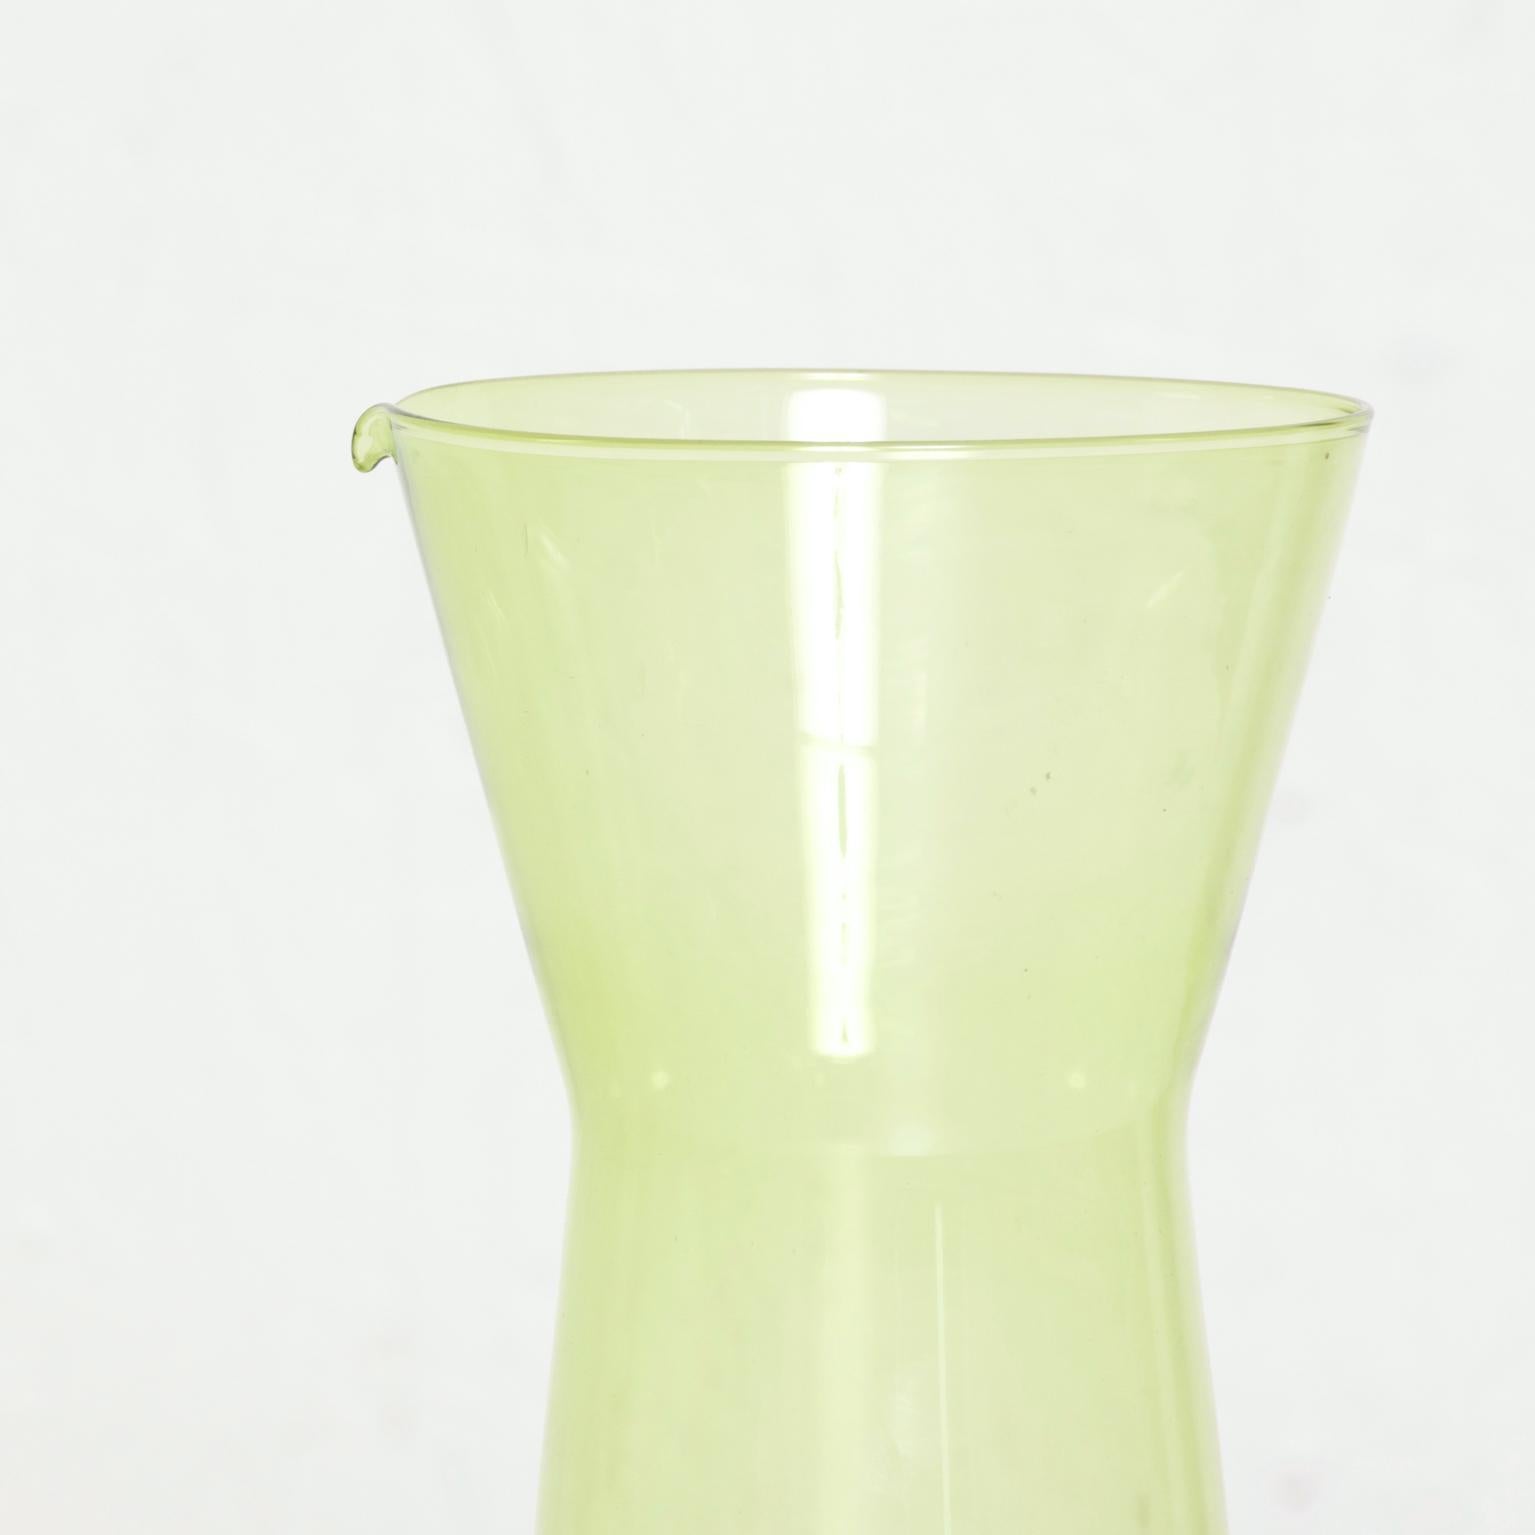 Finnish Mid-Century Modern Finland Green Glass Pitcher Vase Designed by Kaj Franck